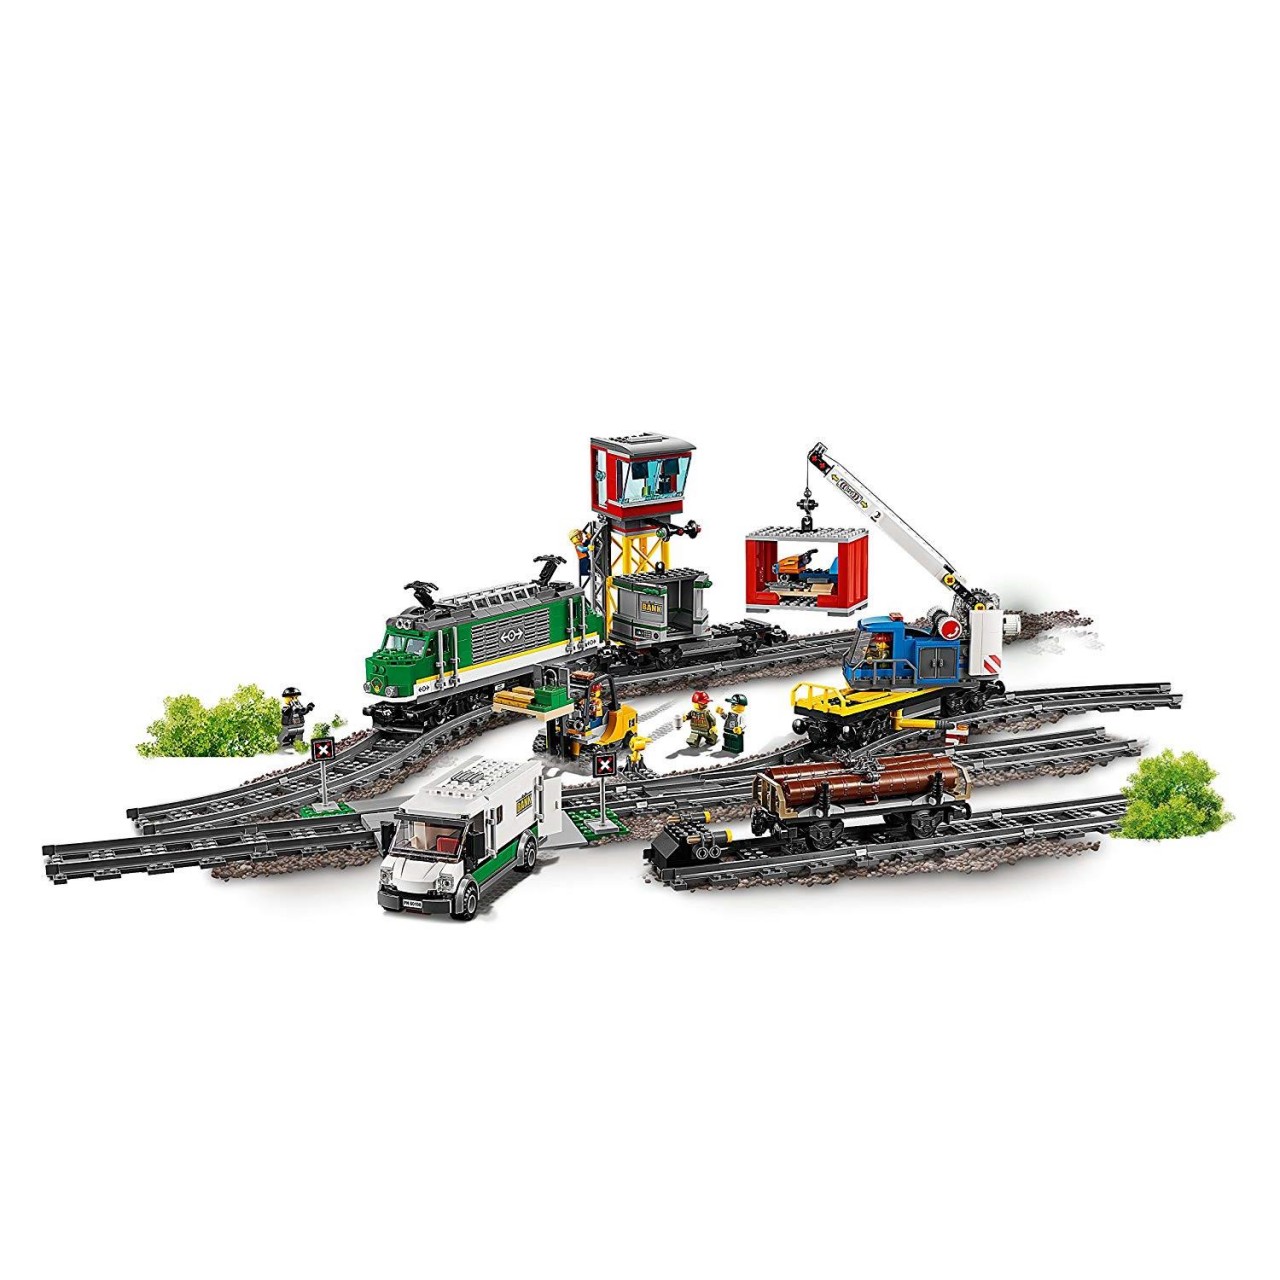 LEGO CITY 60198 Güterzug